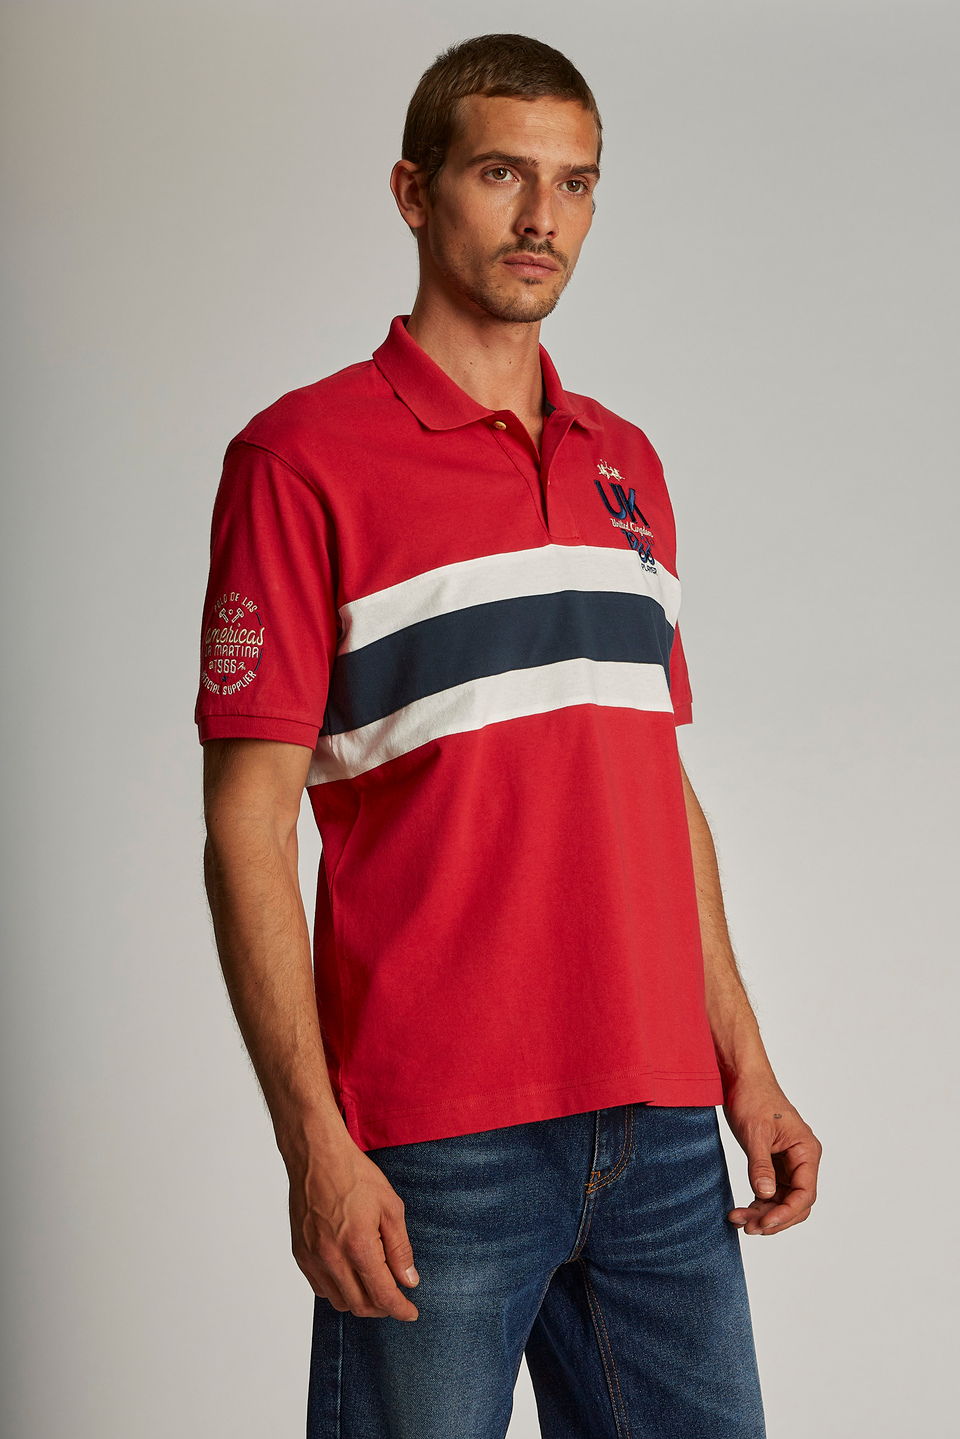 Herren-Poloshirt mit kurzem Arm aus 100 % Baumwolle, oversized Modell - La Martina - Official Online Shop